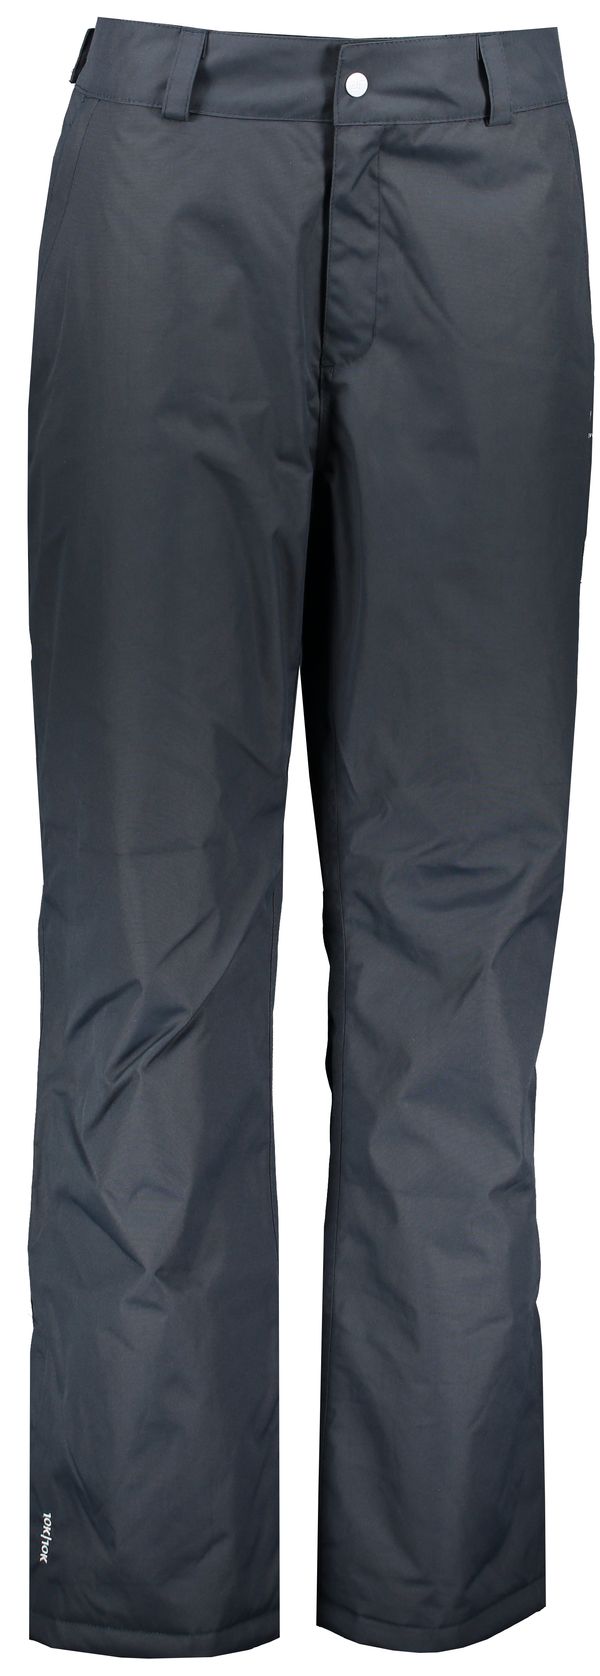 2117 TÄLLBERG - men's winter ski trousers - ink (gray-black)